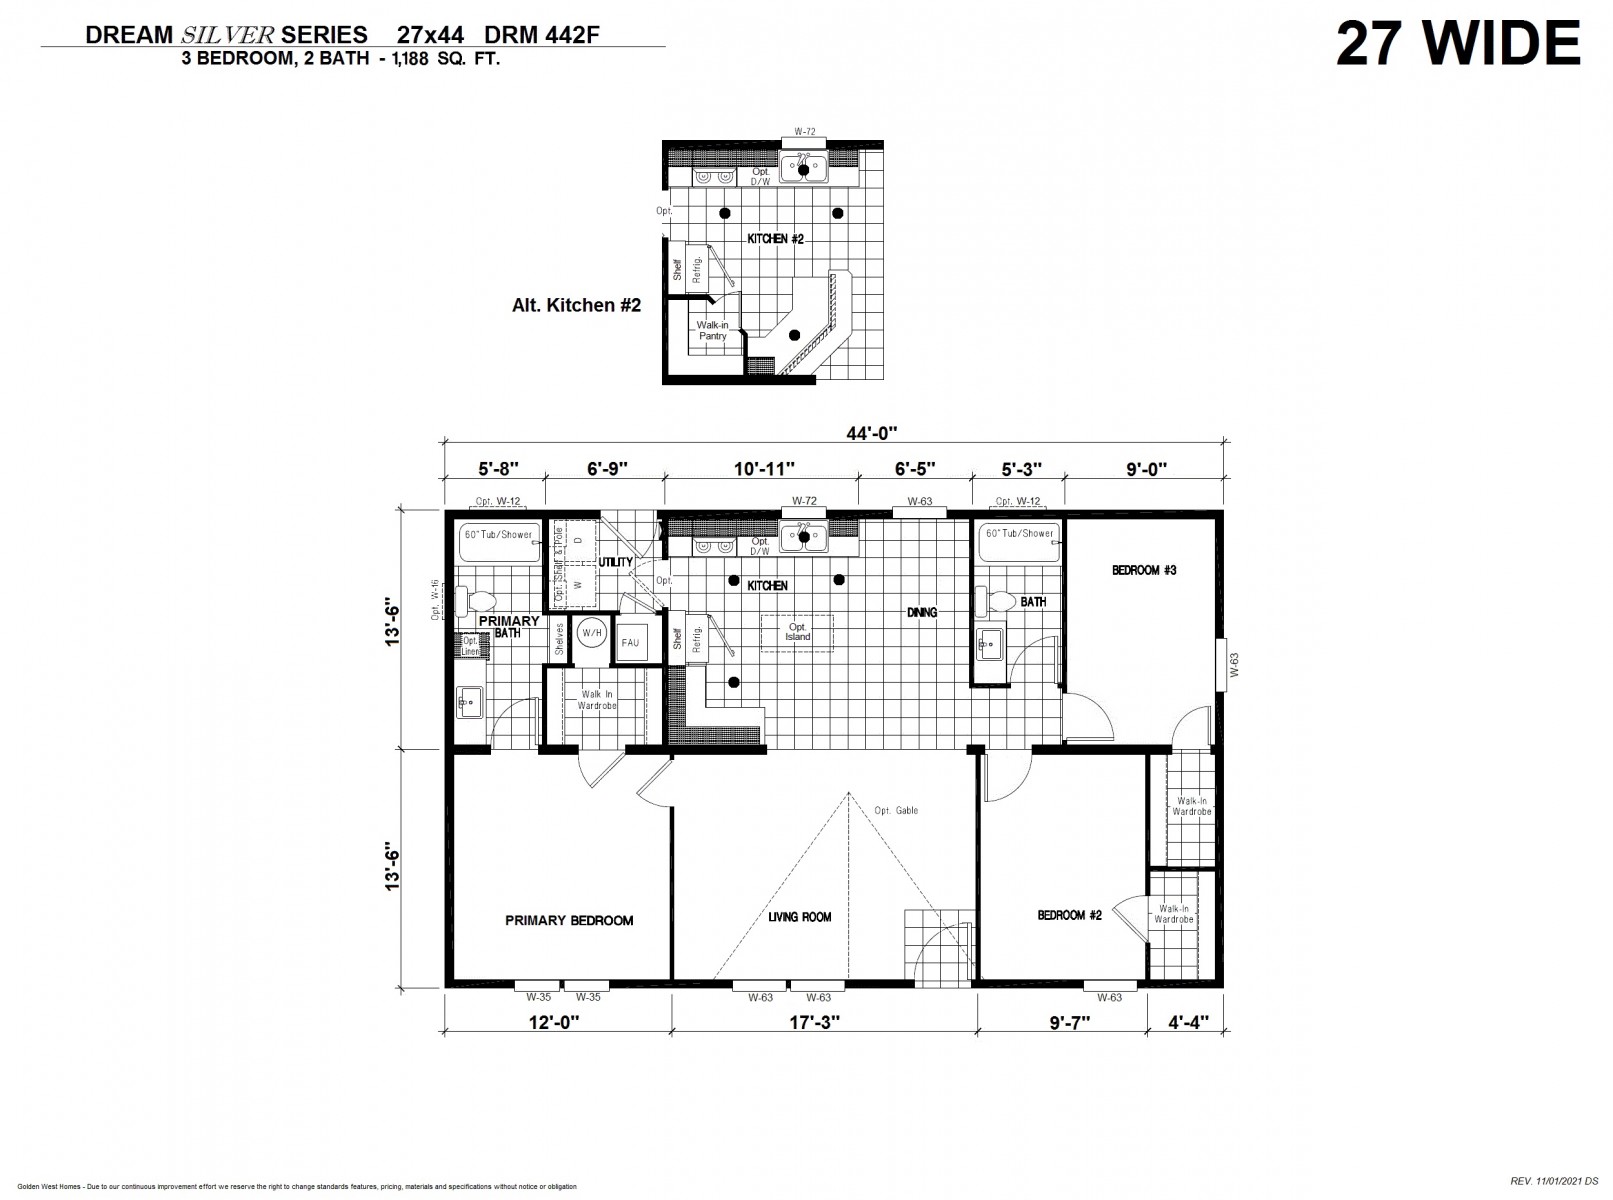 Homes Direct Modular Homes - Model DRM442F - Floorplan